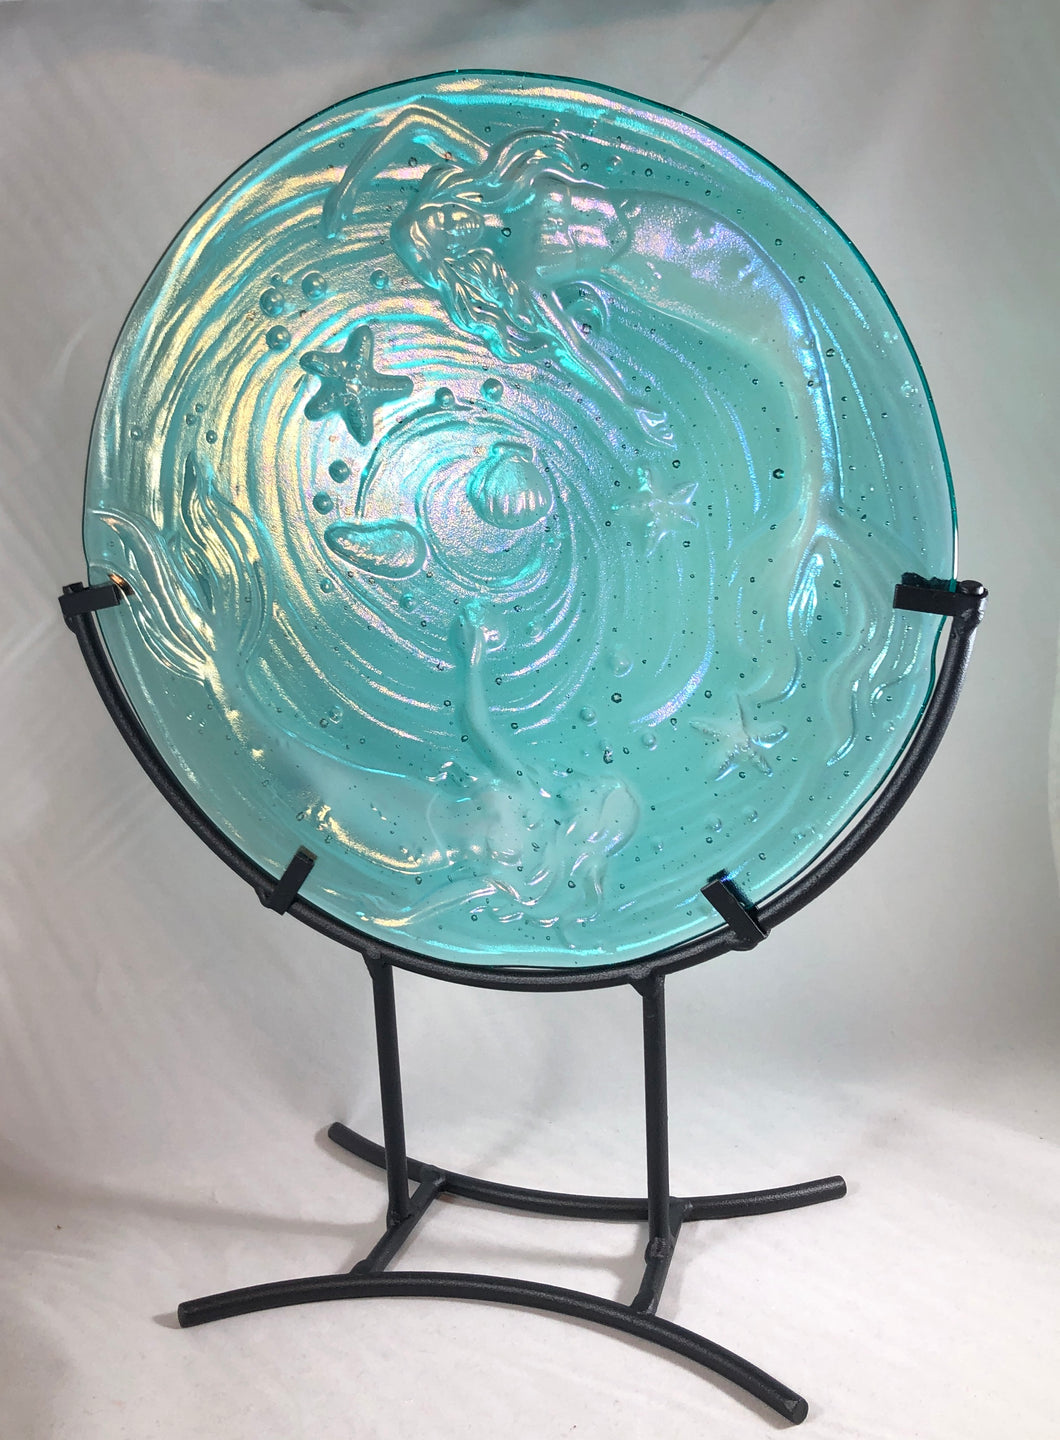 Mermaids - Fused Glass Art